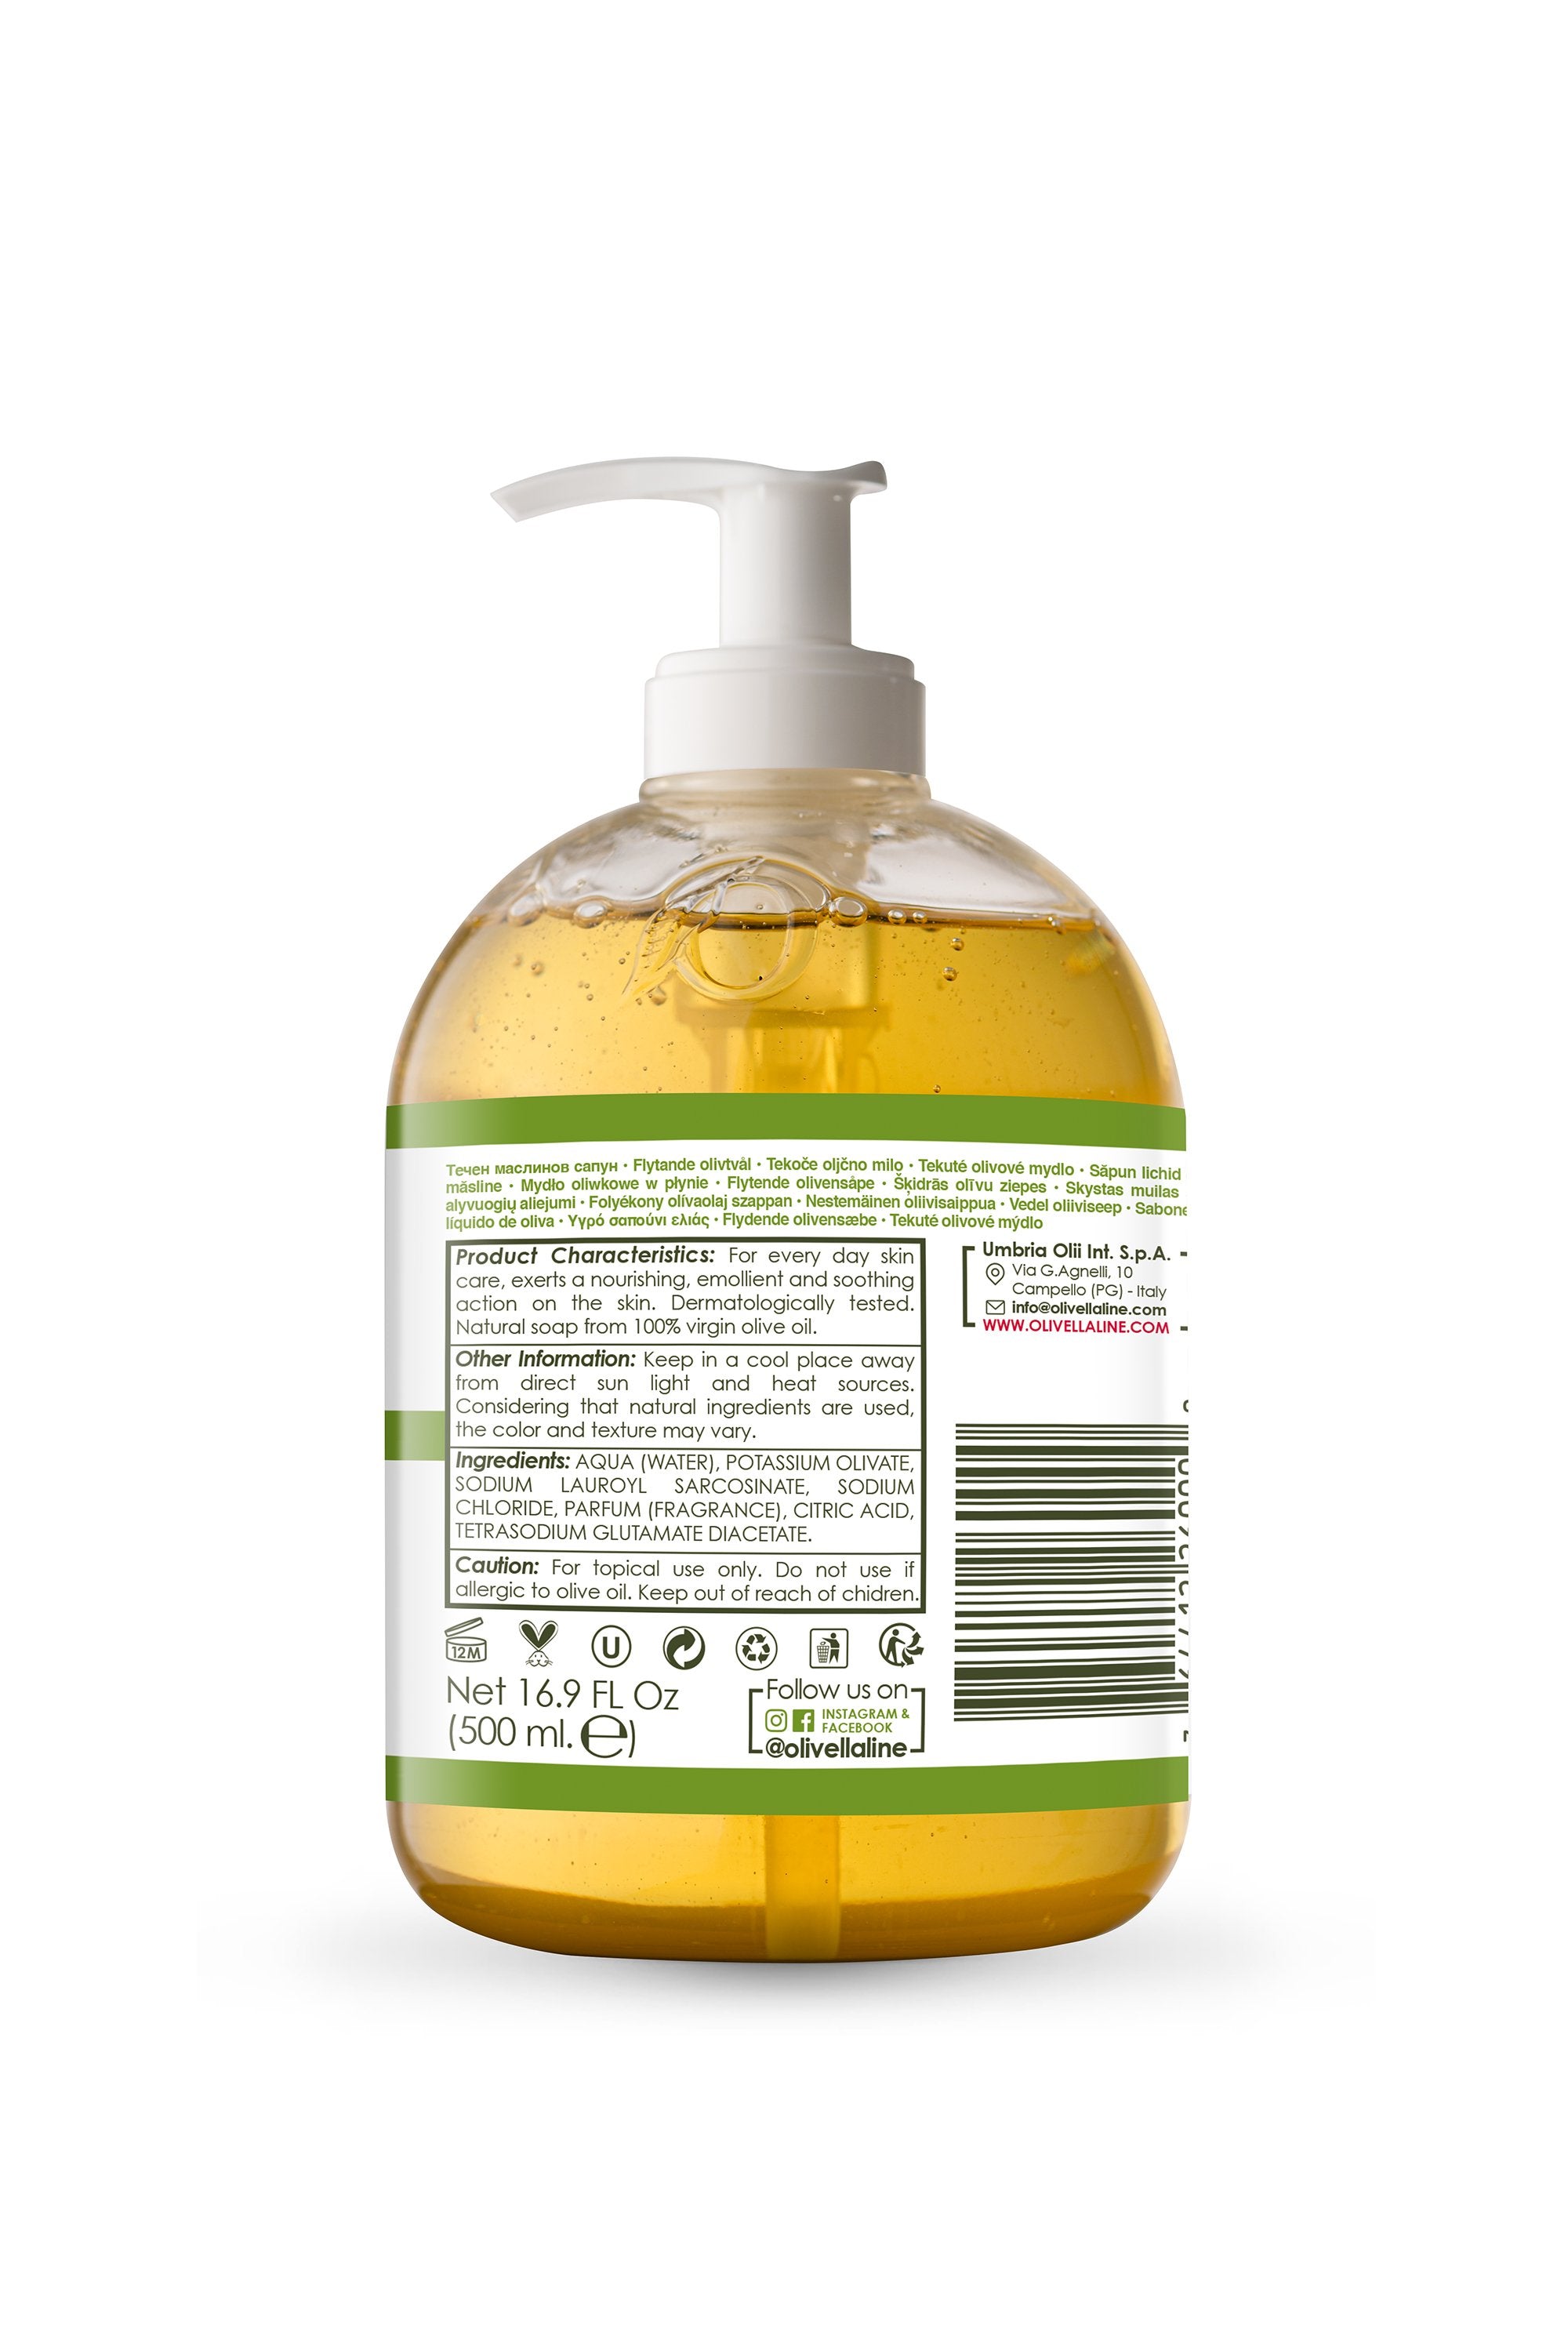 Olivella Face & Body Liquid Soap - Classic 16.9 Oz - Olivella